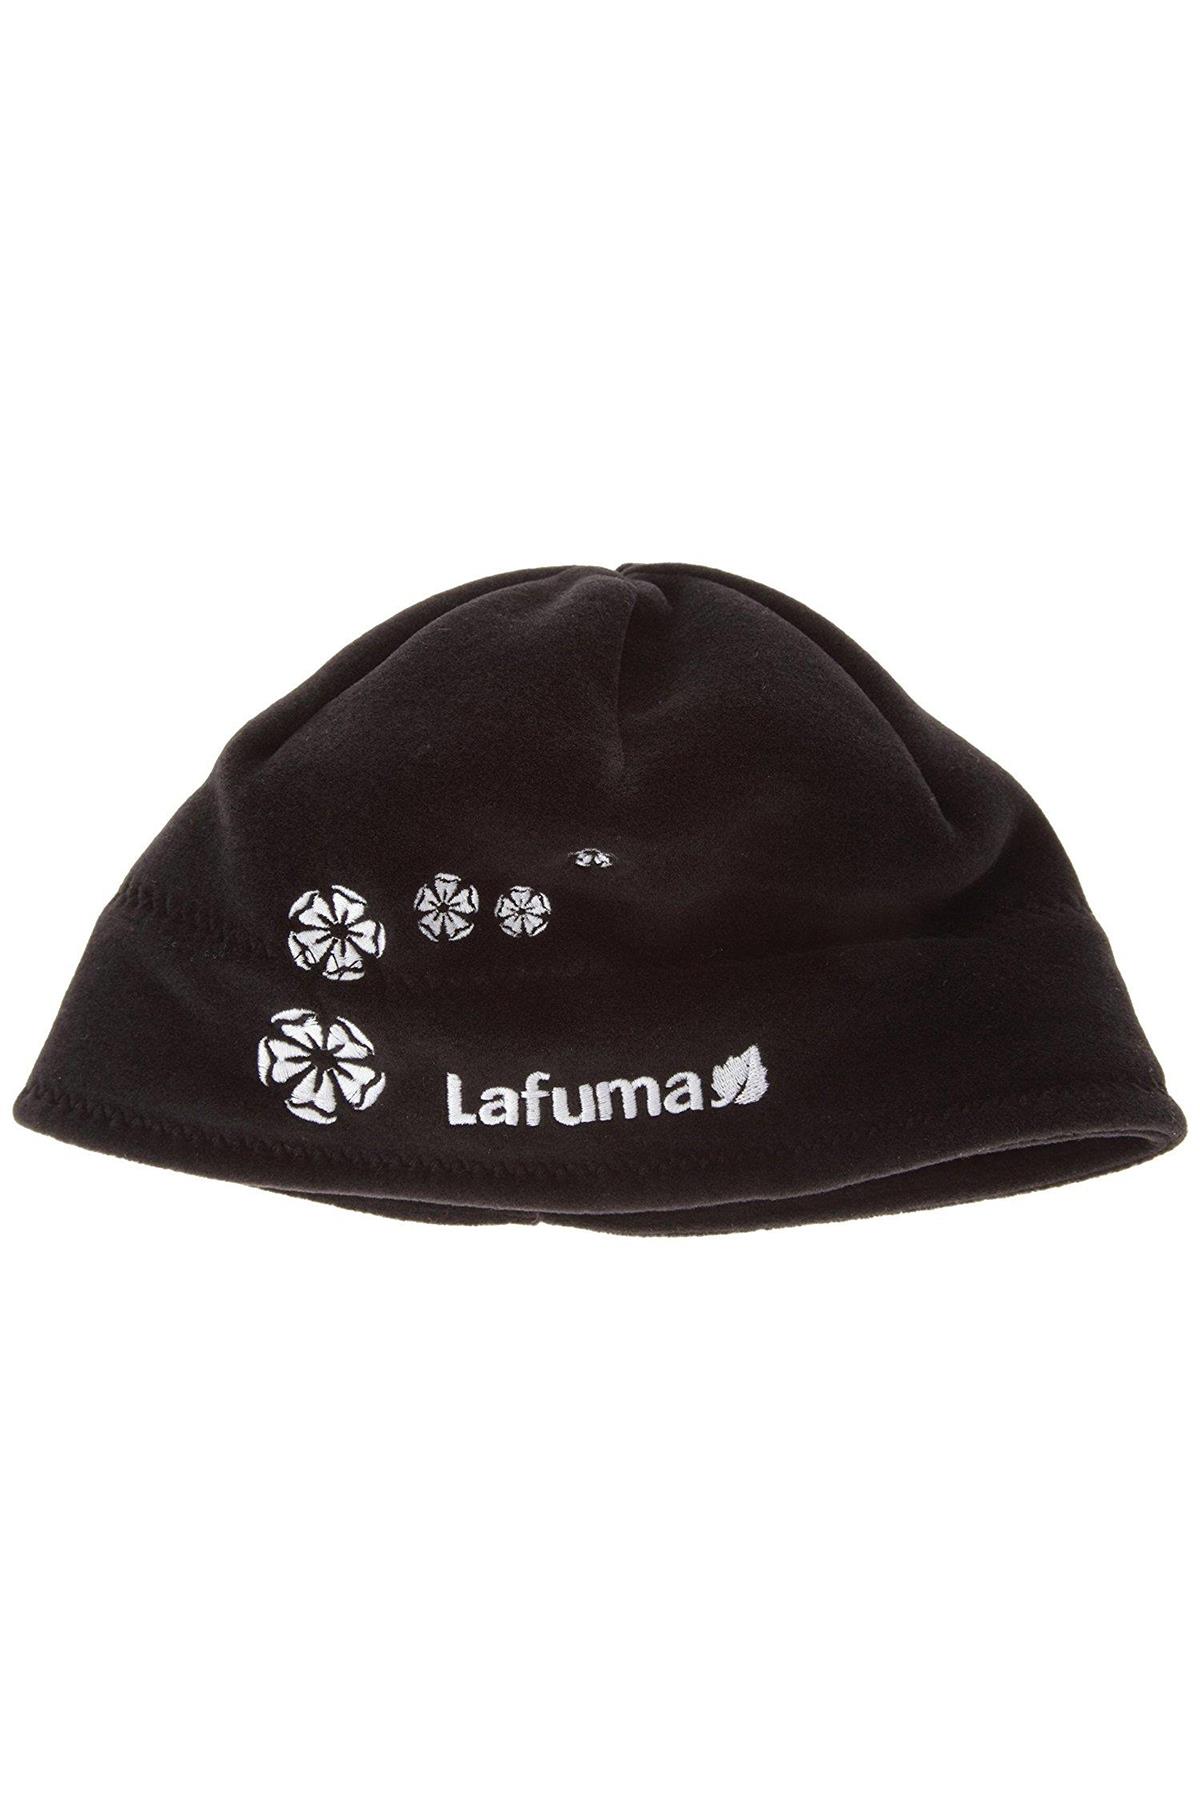  Lafuma Ld Hanna Hat Lfv9907 D34